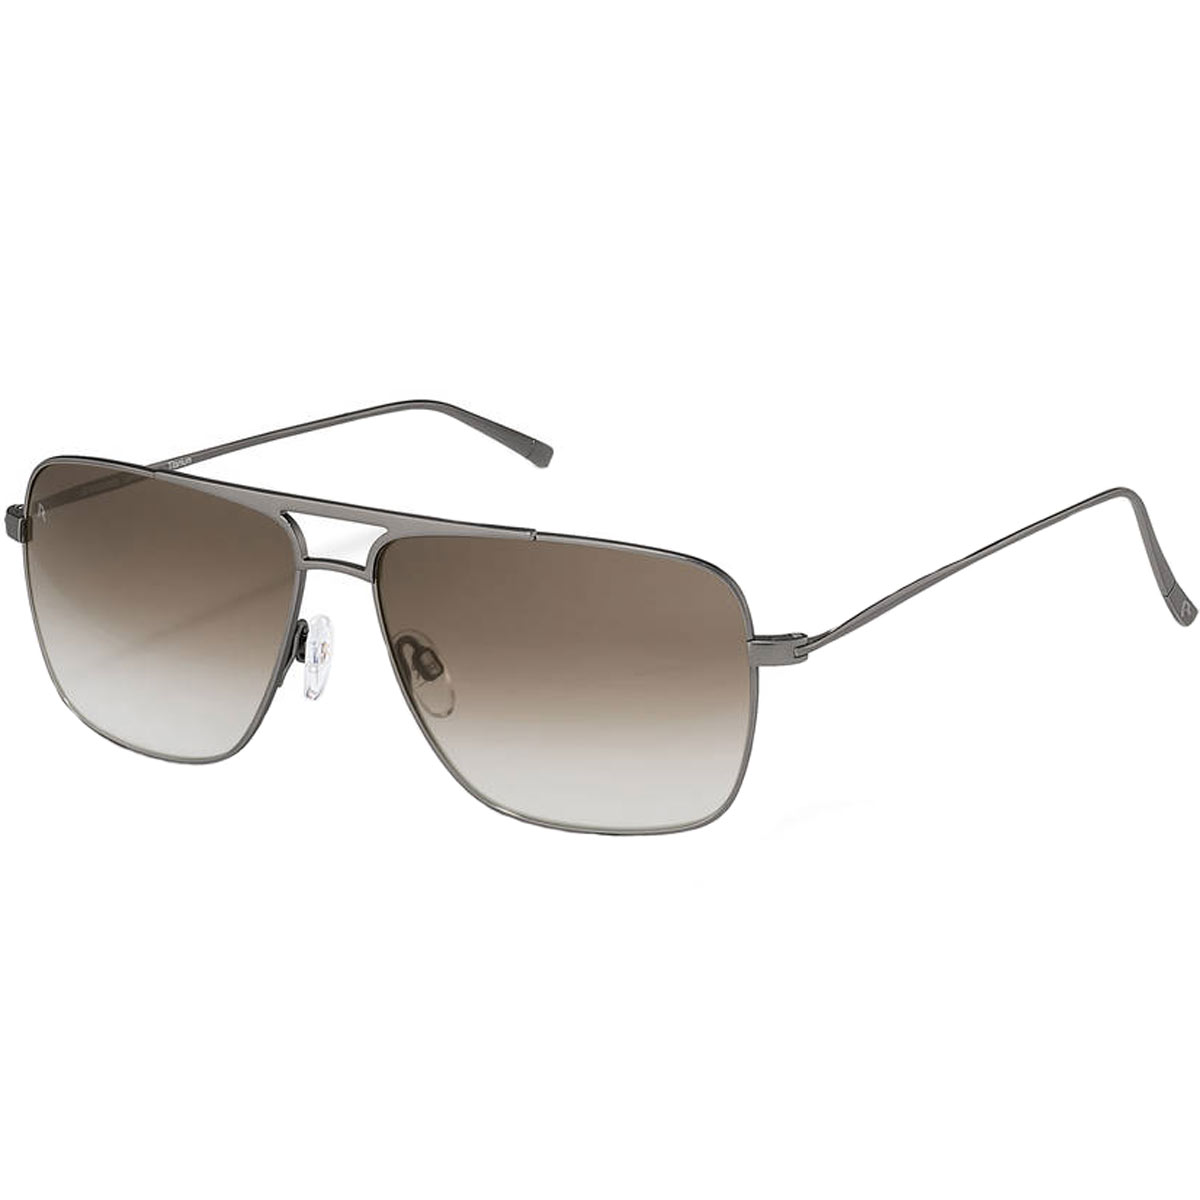 Rodenstock R7414 B Men's Dark Gunmetal Titanium Frame Sunglasses - image 1 of 8